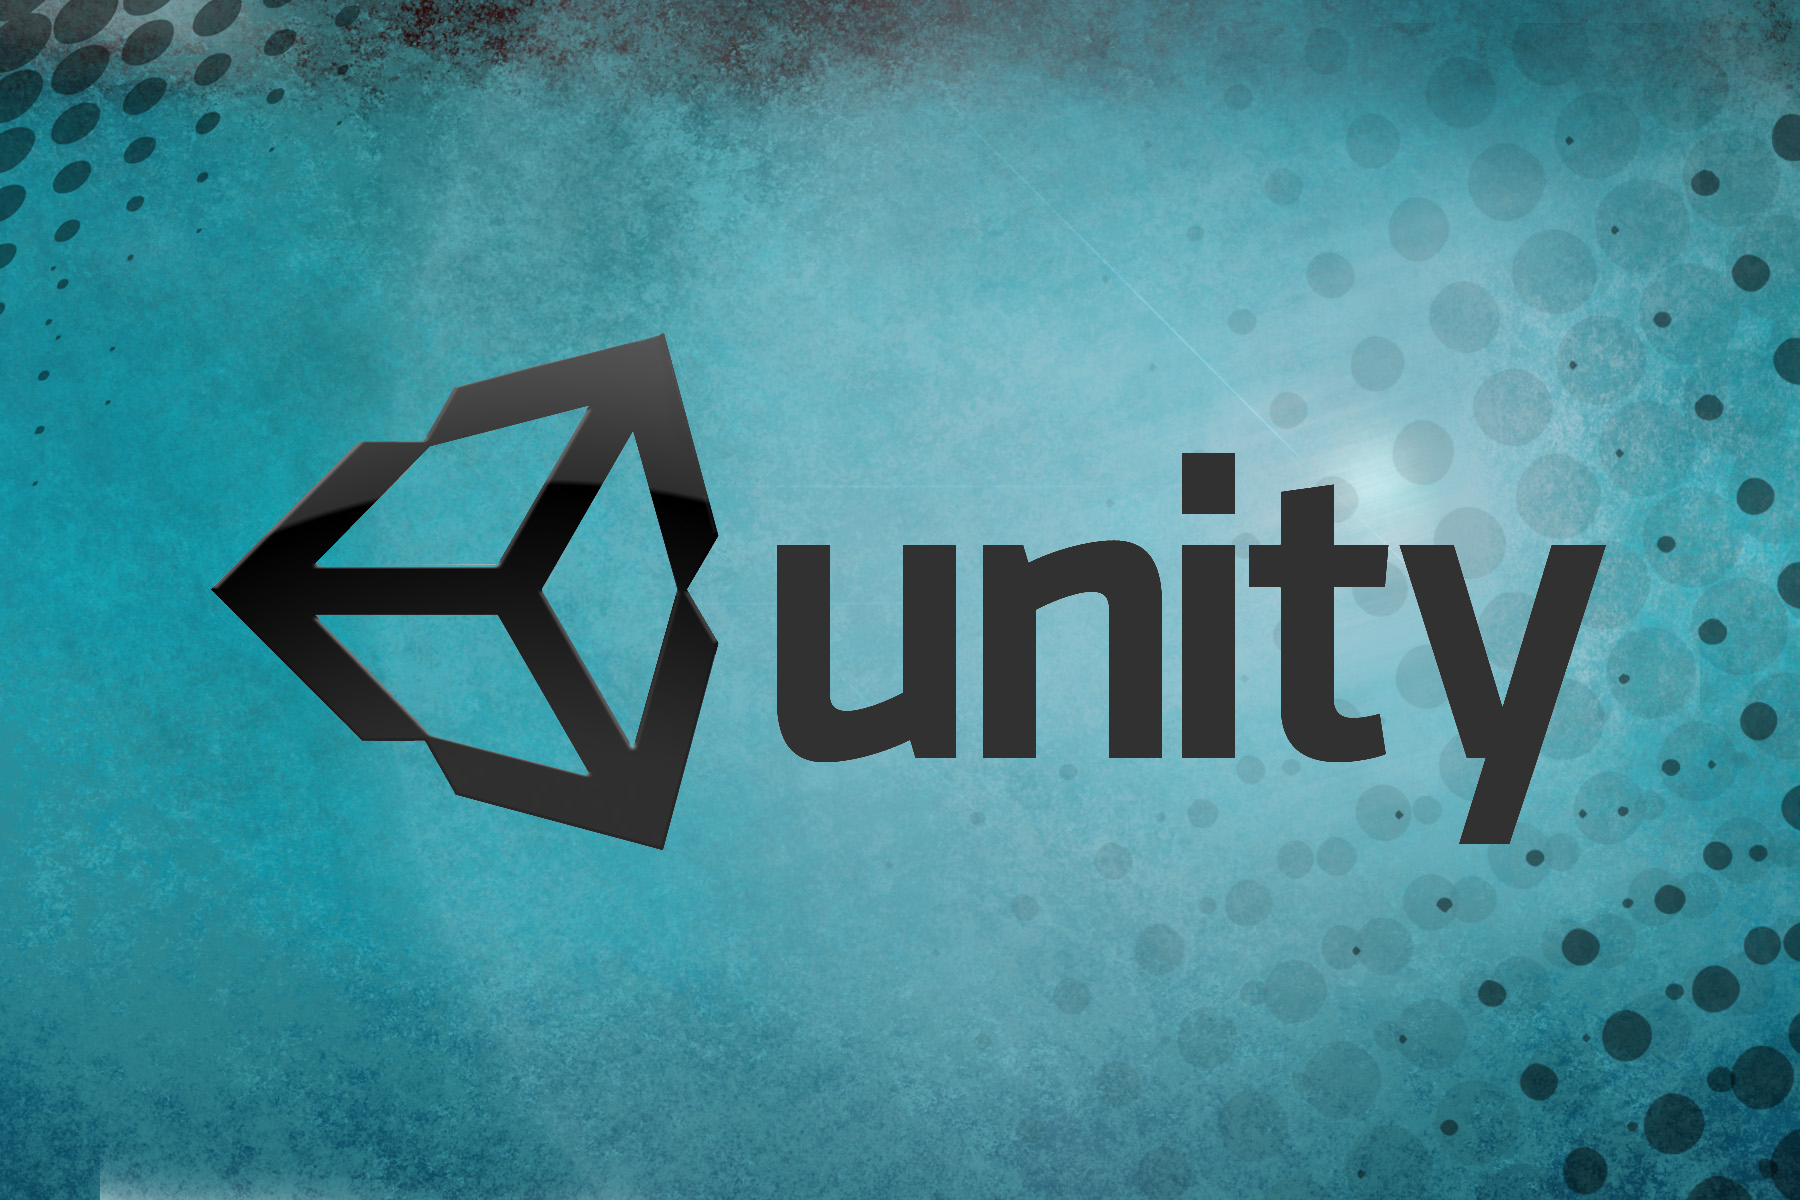 Unity Desktop Background Forum